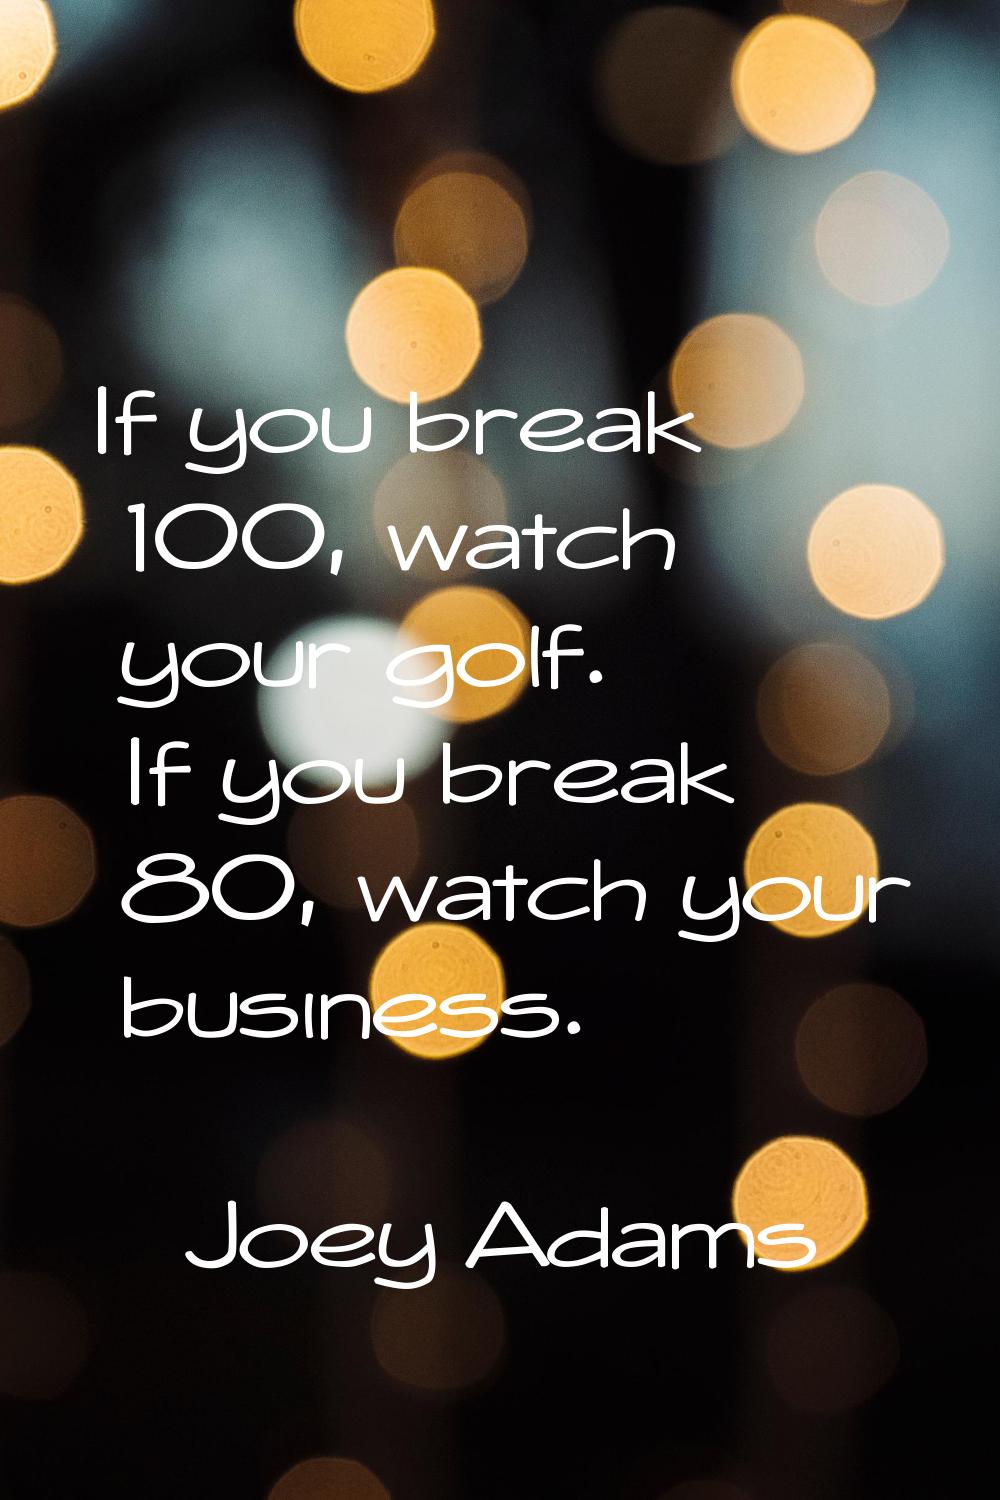 If you break 100, watch your golf. If you break 80, watch your business.